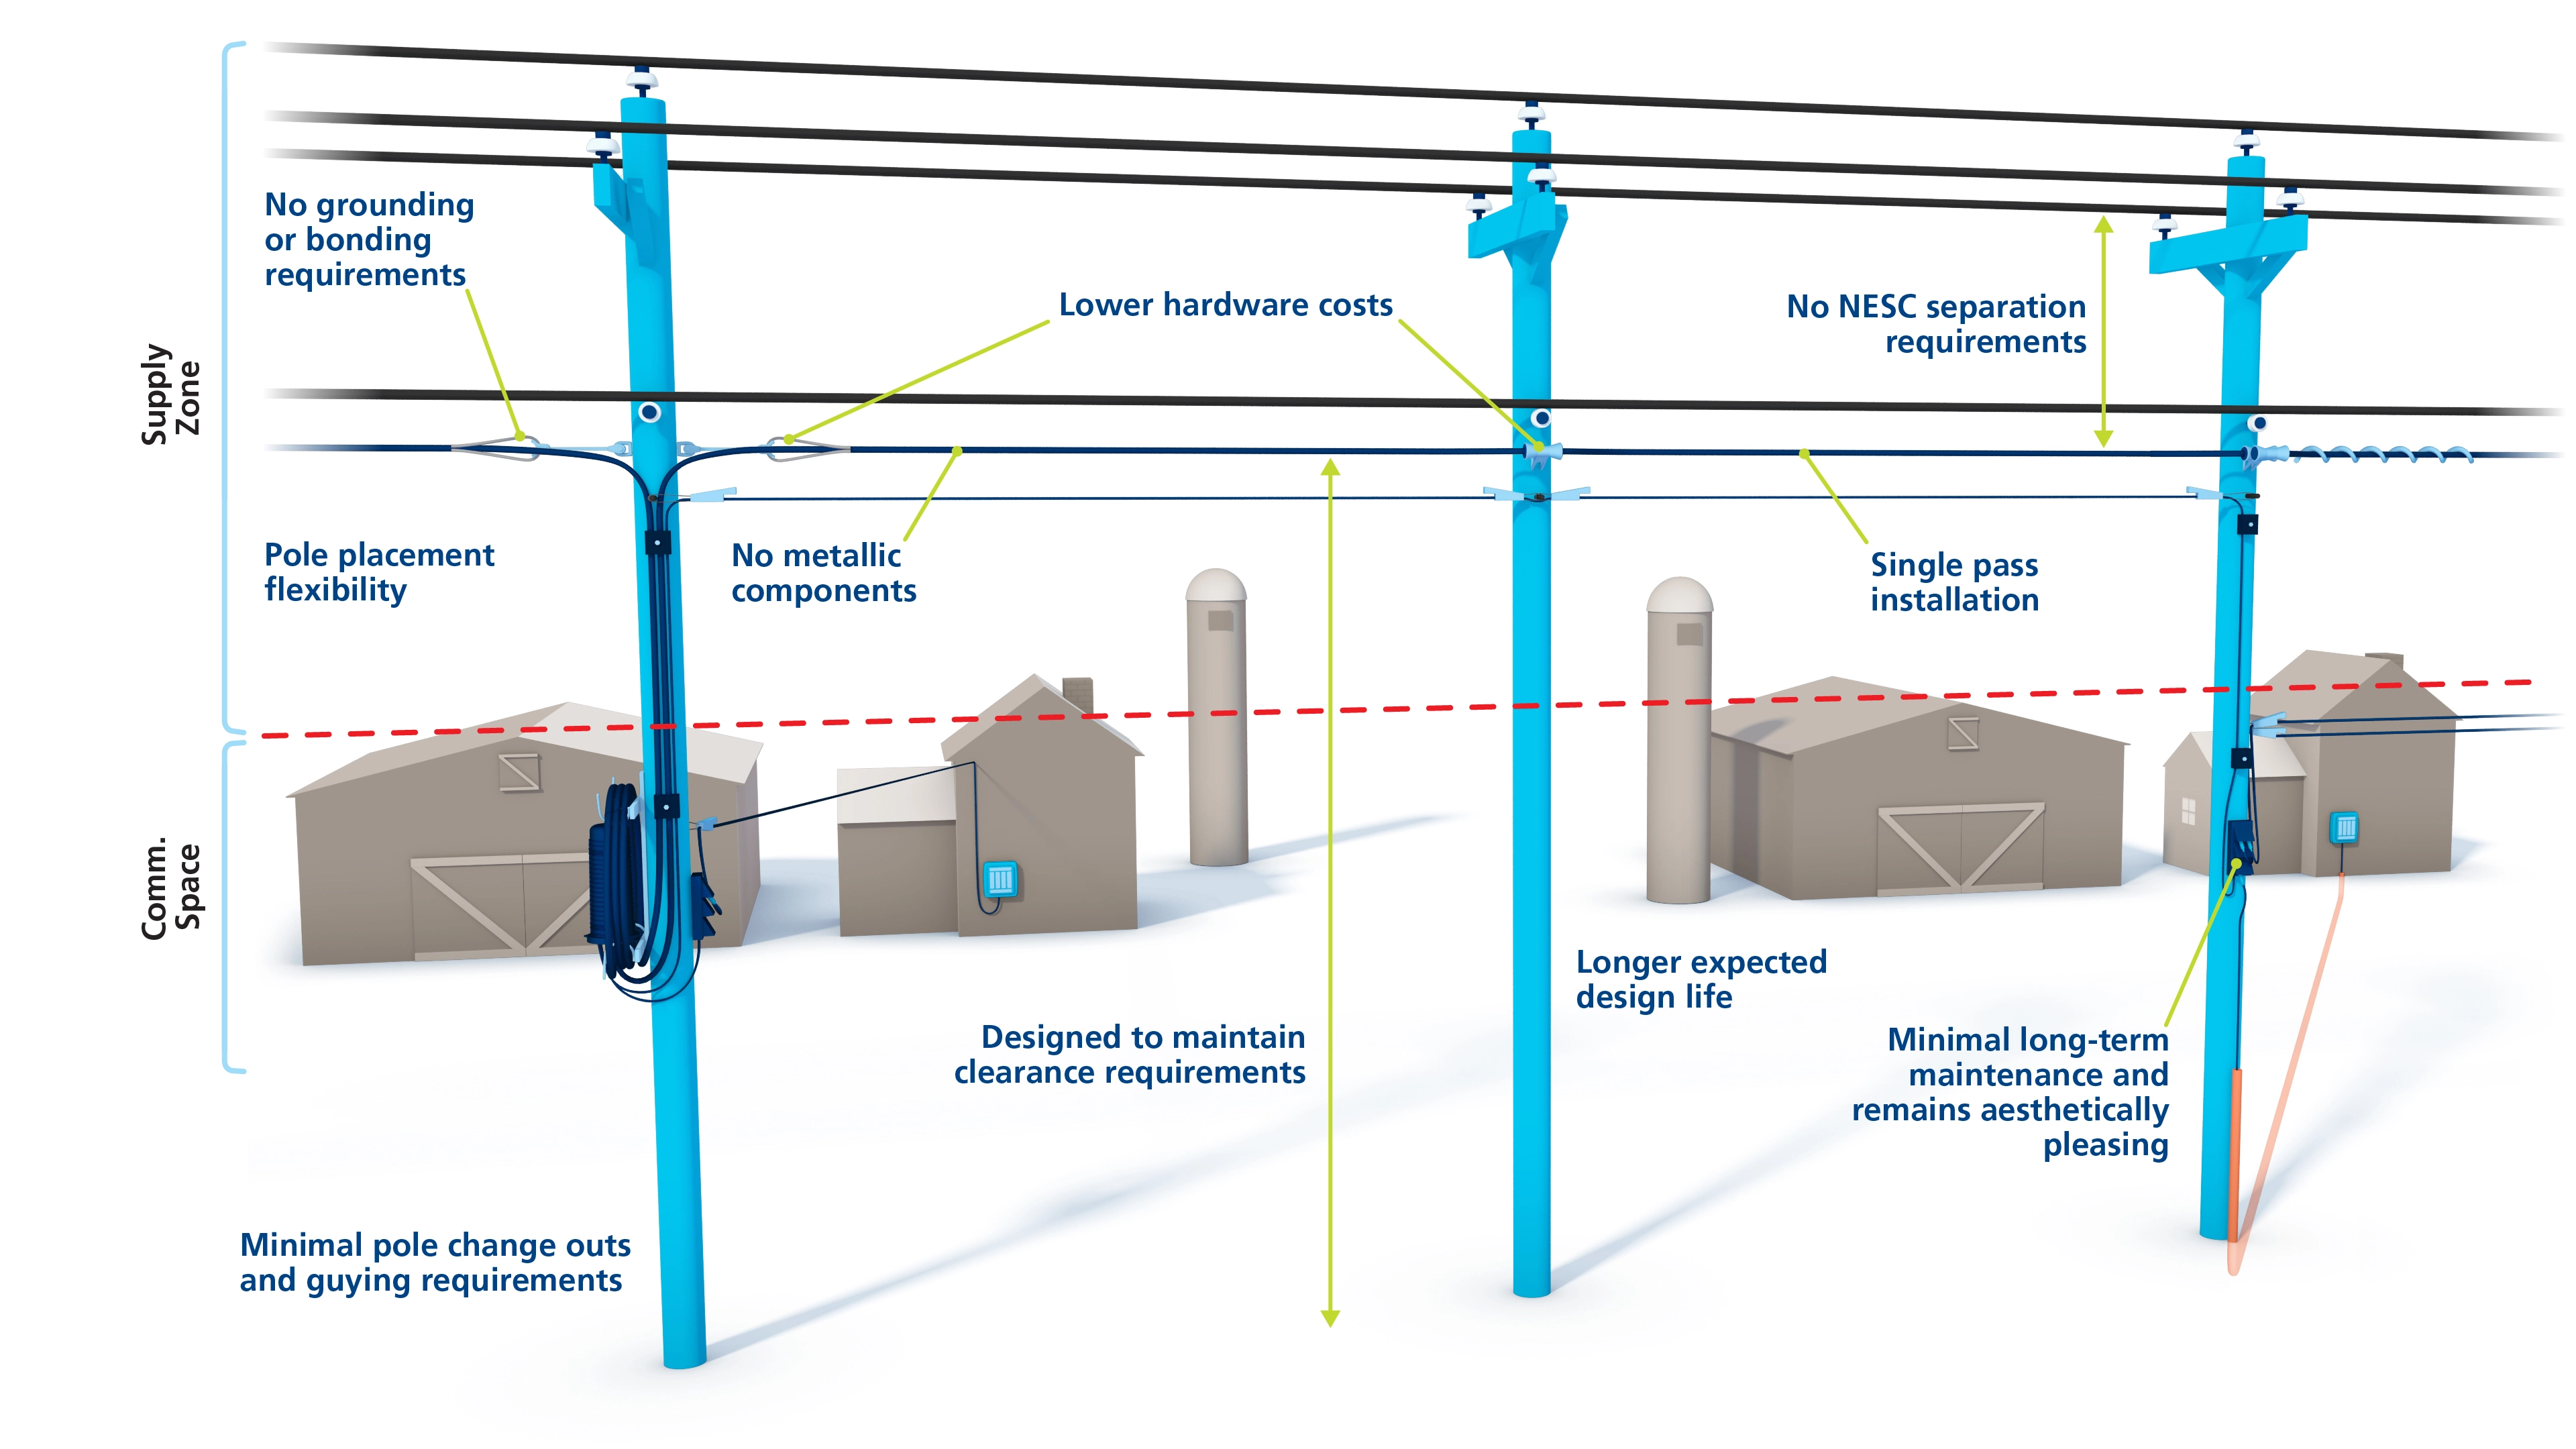 Cables de fibra óptica  How it works, Application & Advantages